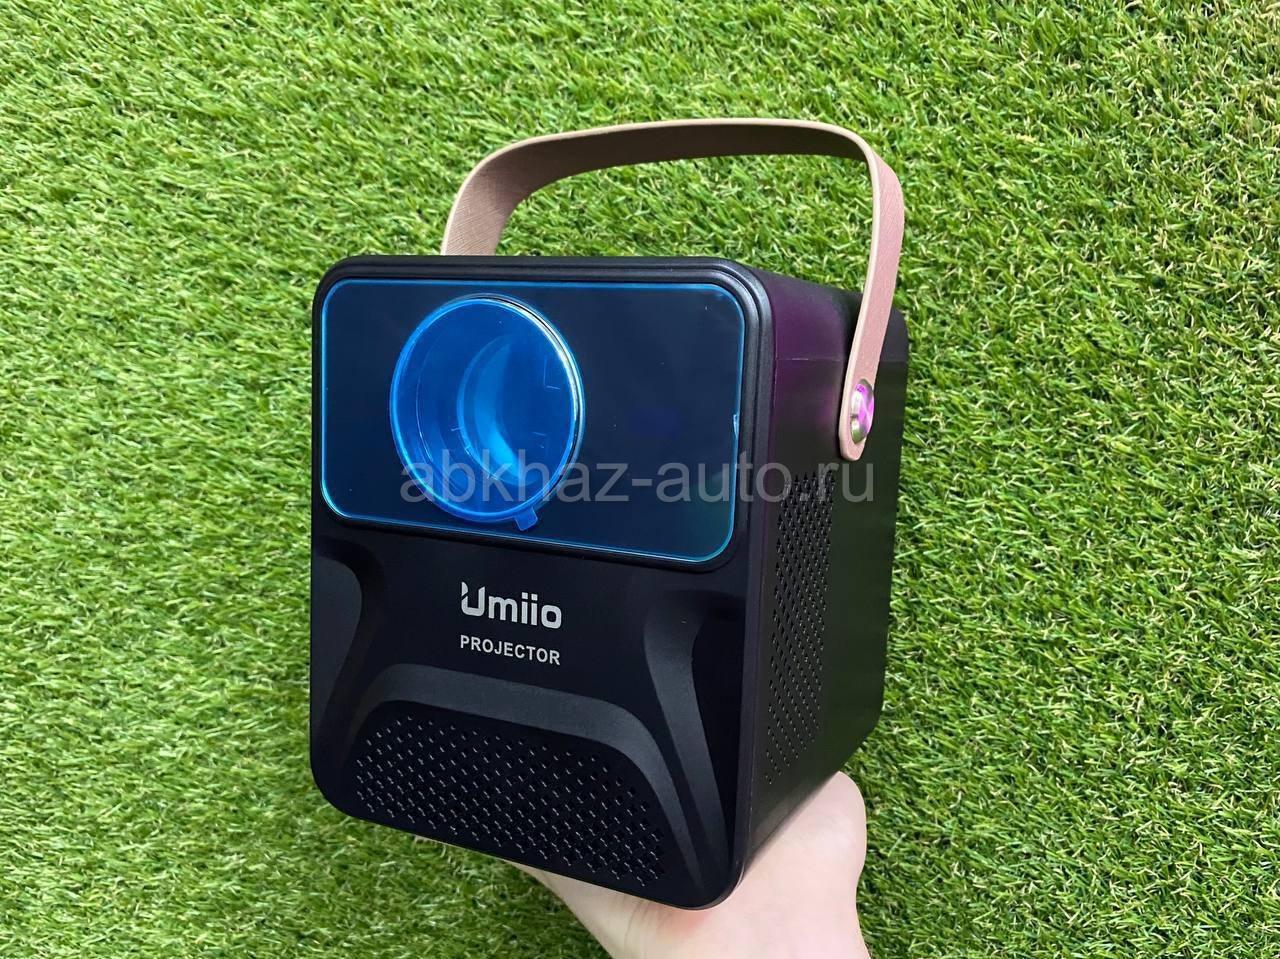 Umiio Projector p860. Портативный проектор Umiio p860. Проектор Umiio a007. Проектор Umiio Projector p860 , чёрный. Umiio p30 ultra